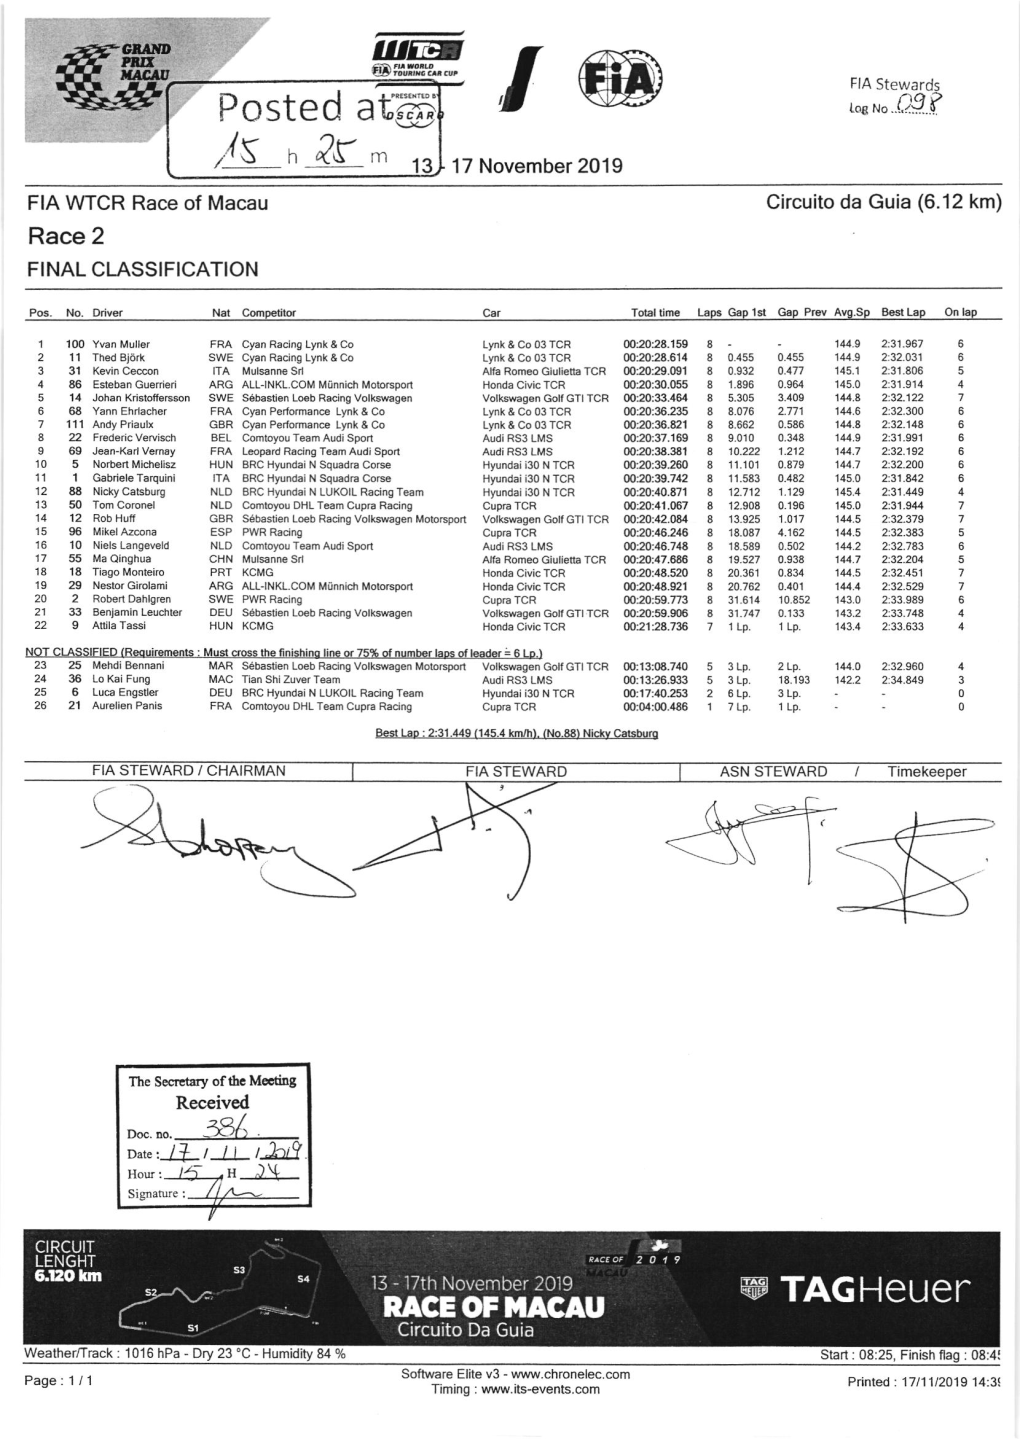 Race 2 Classification